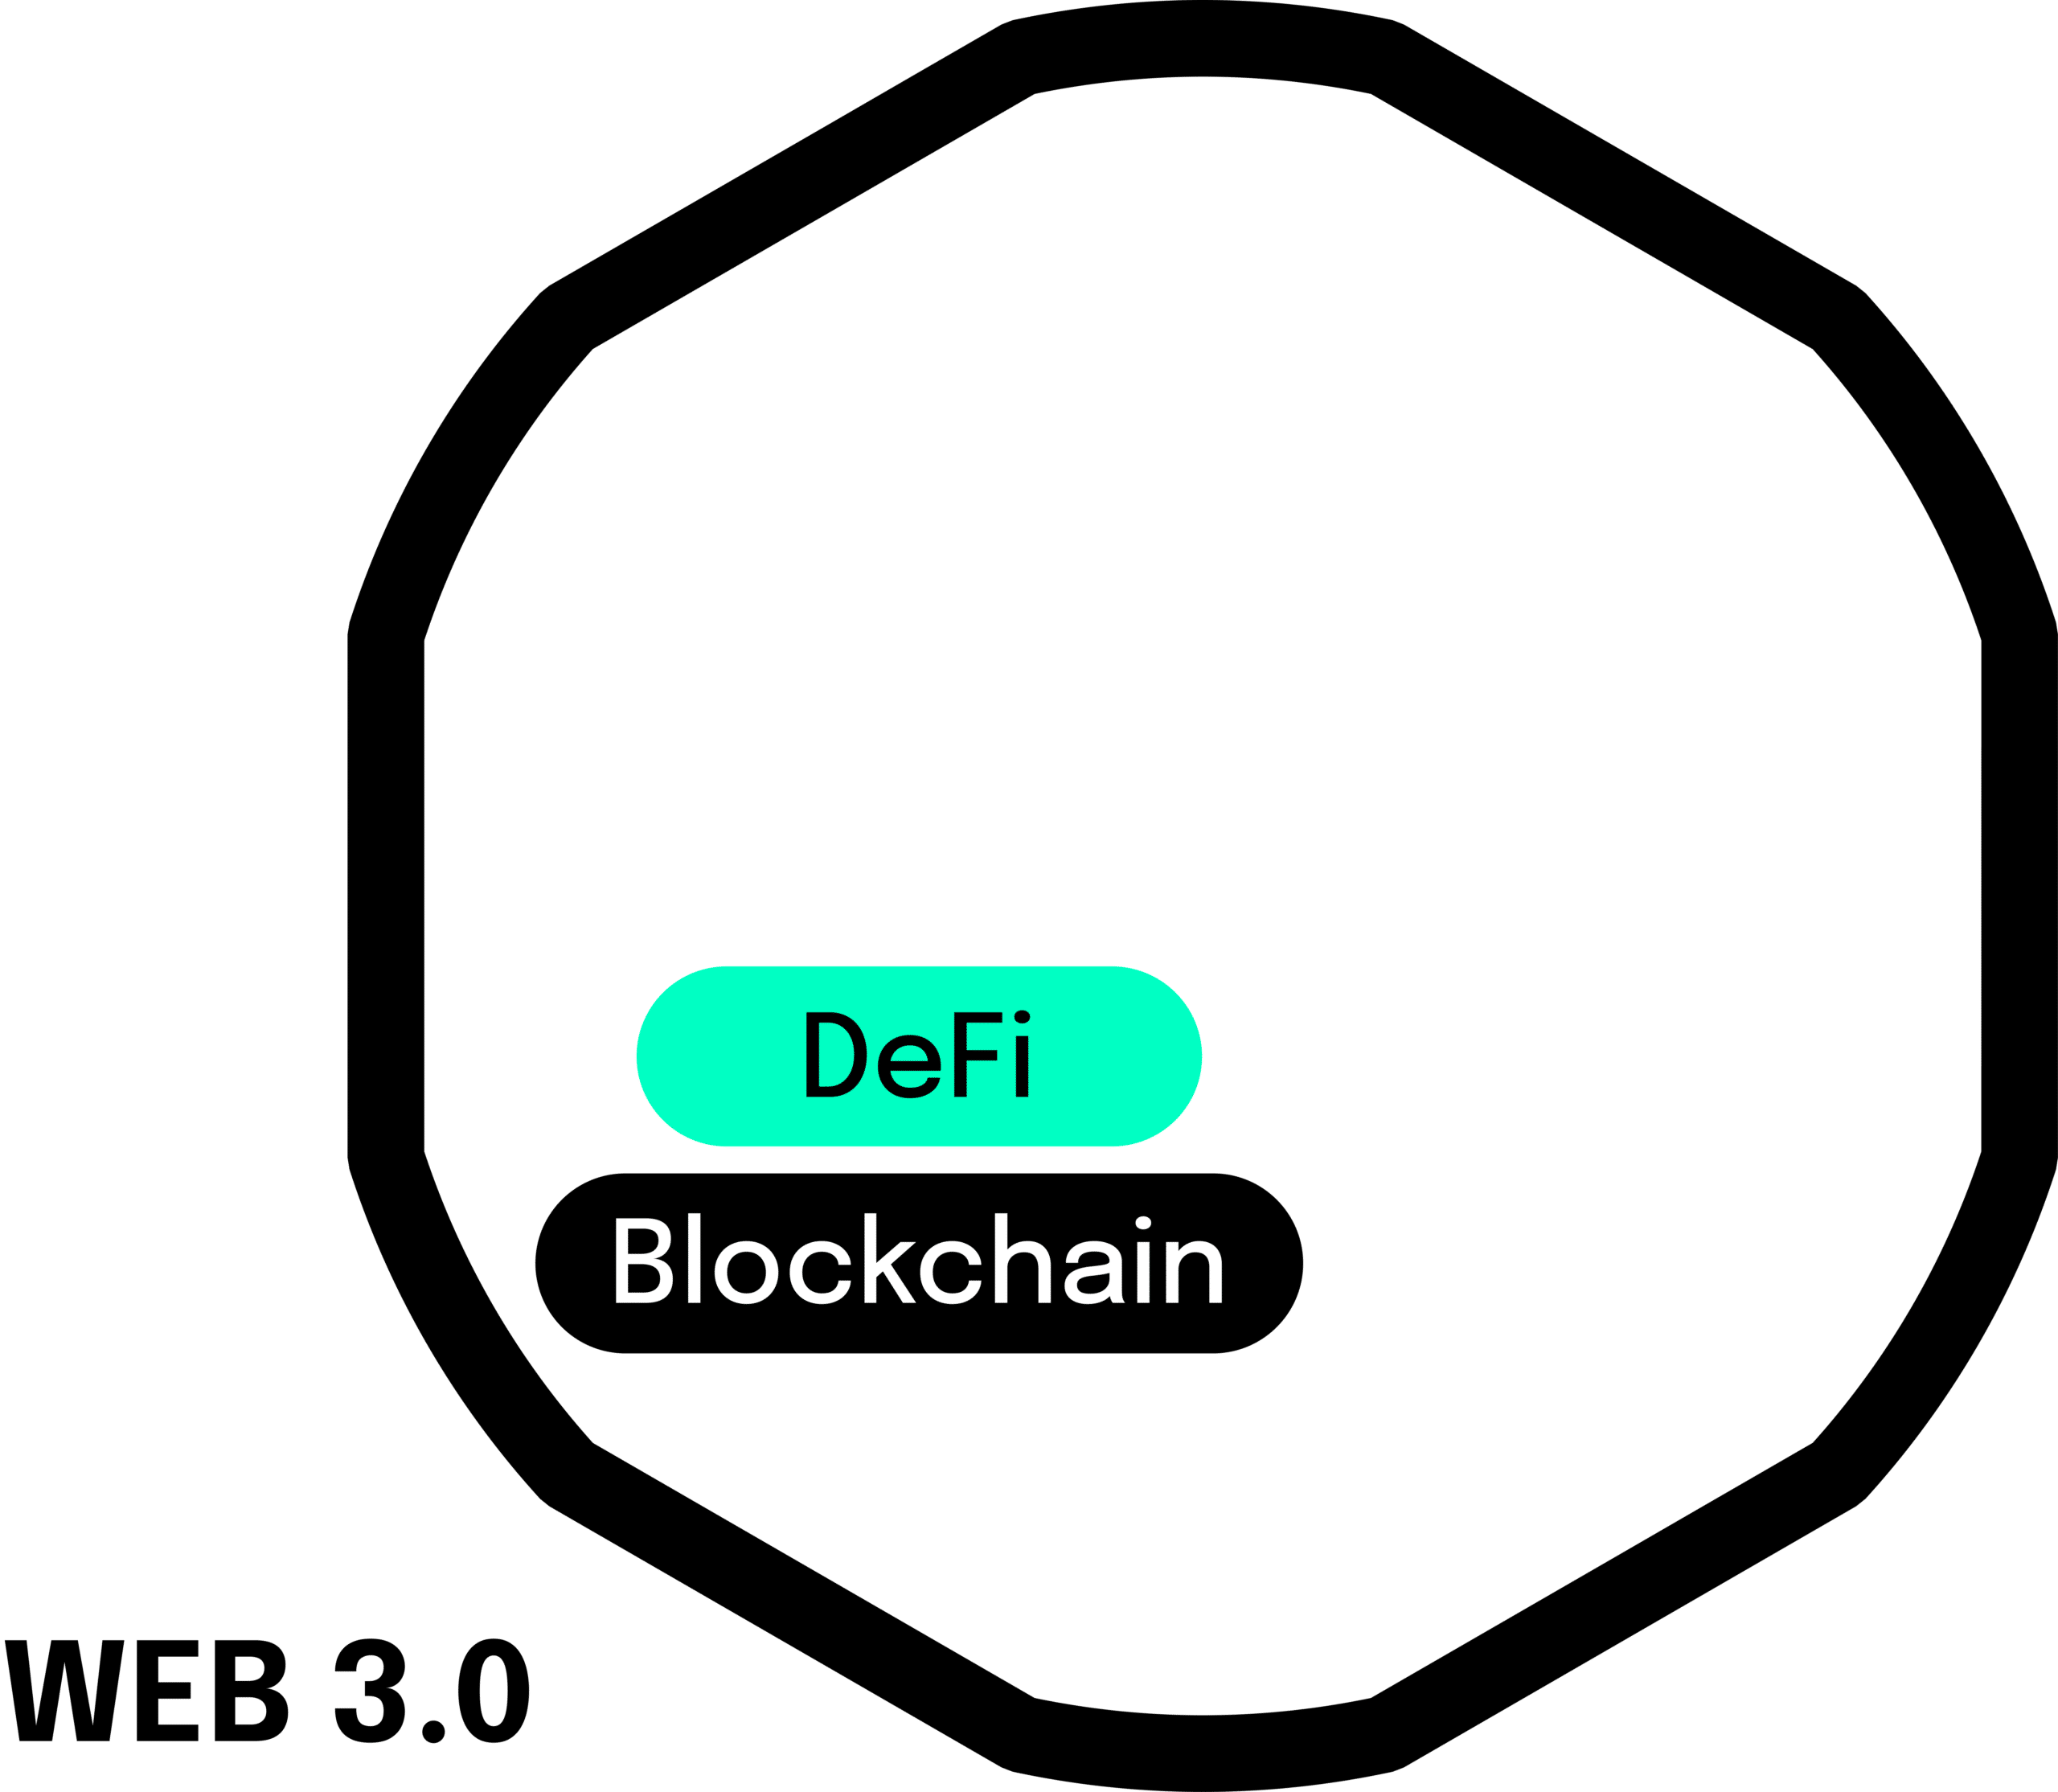 Web 3.0 - Blockchain, Defi